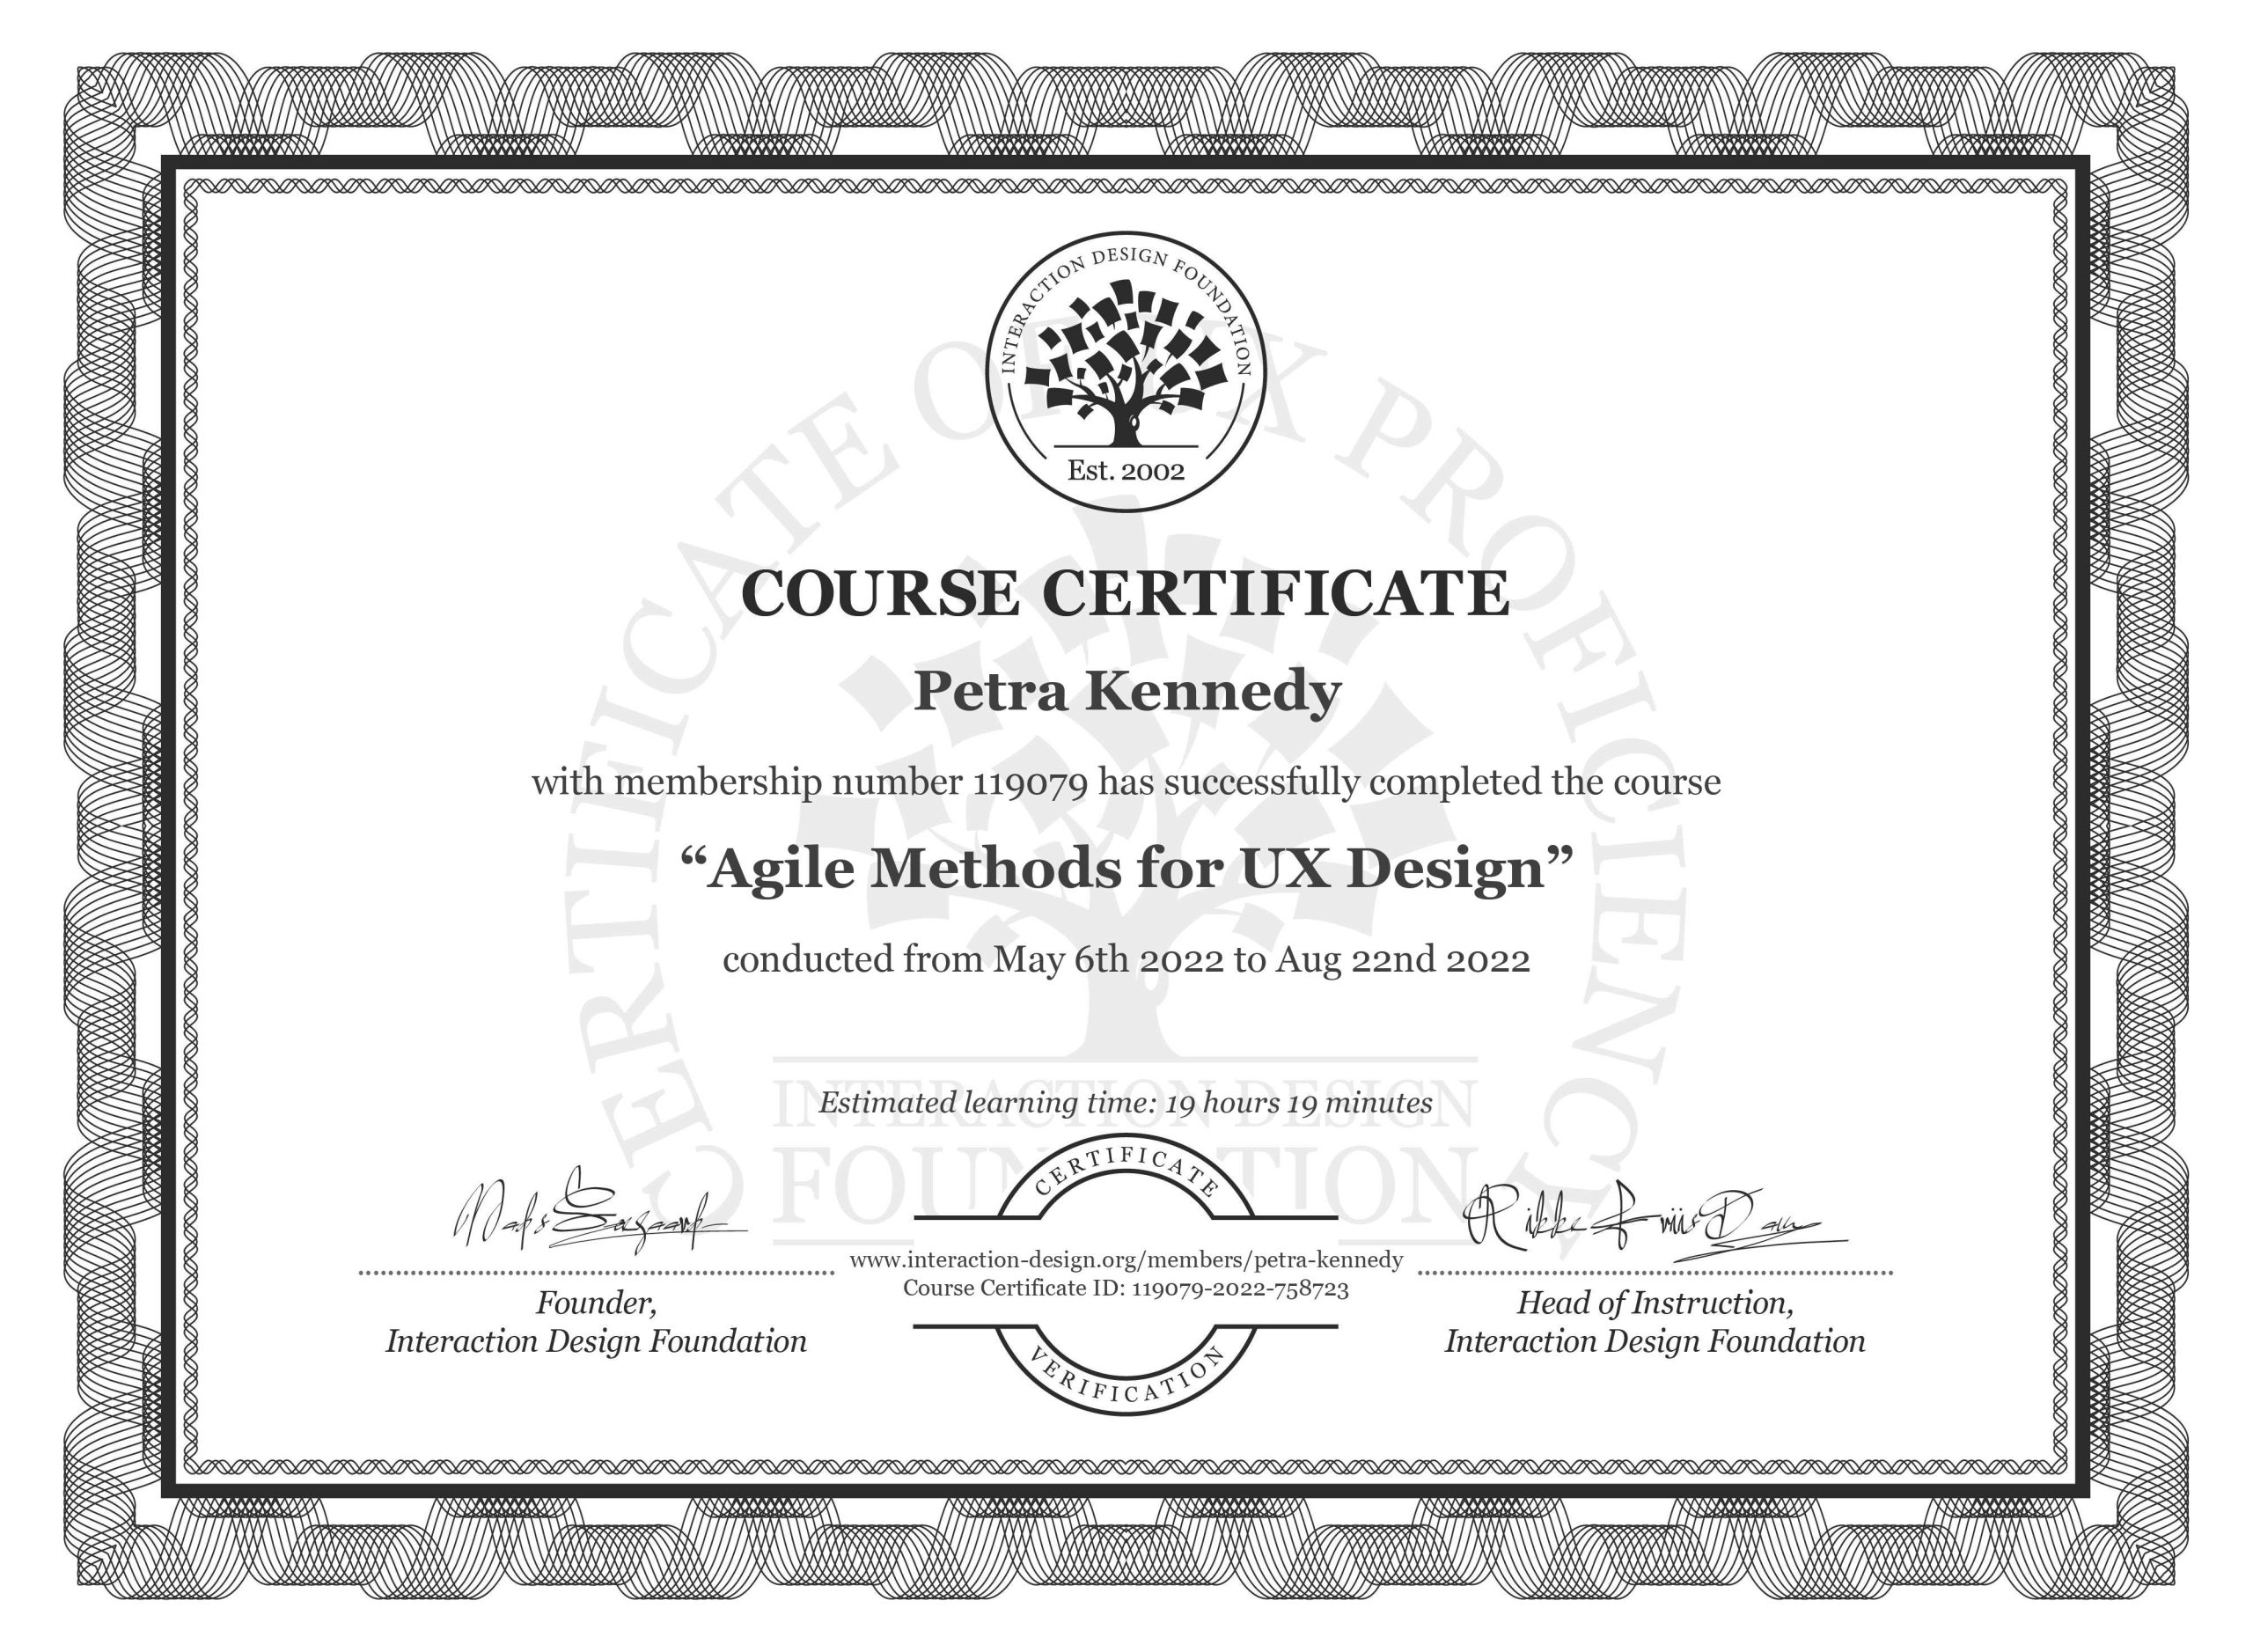 IxDF course certificate Agile Methods for UX design